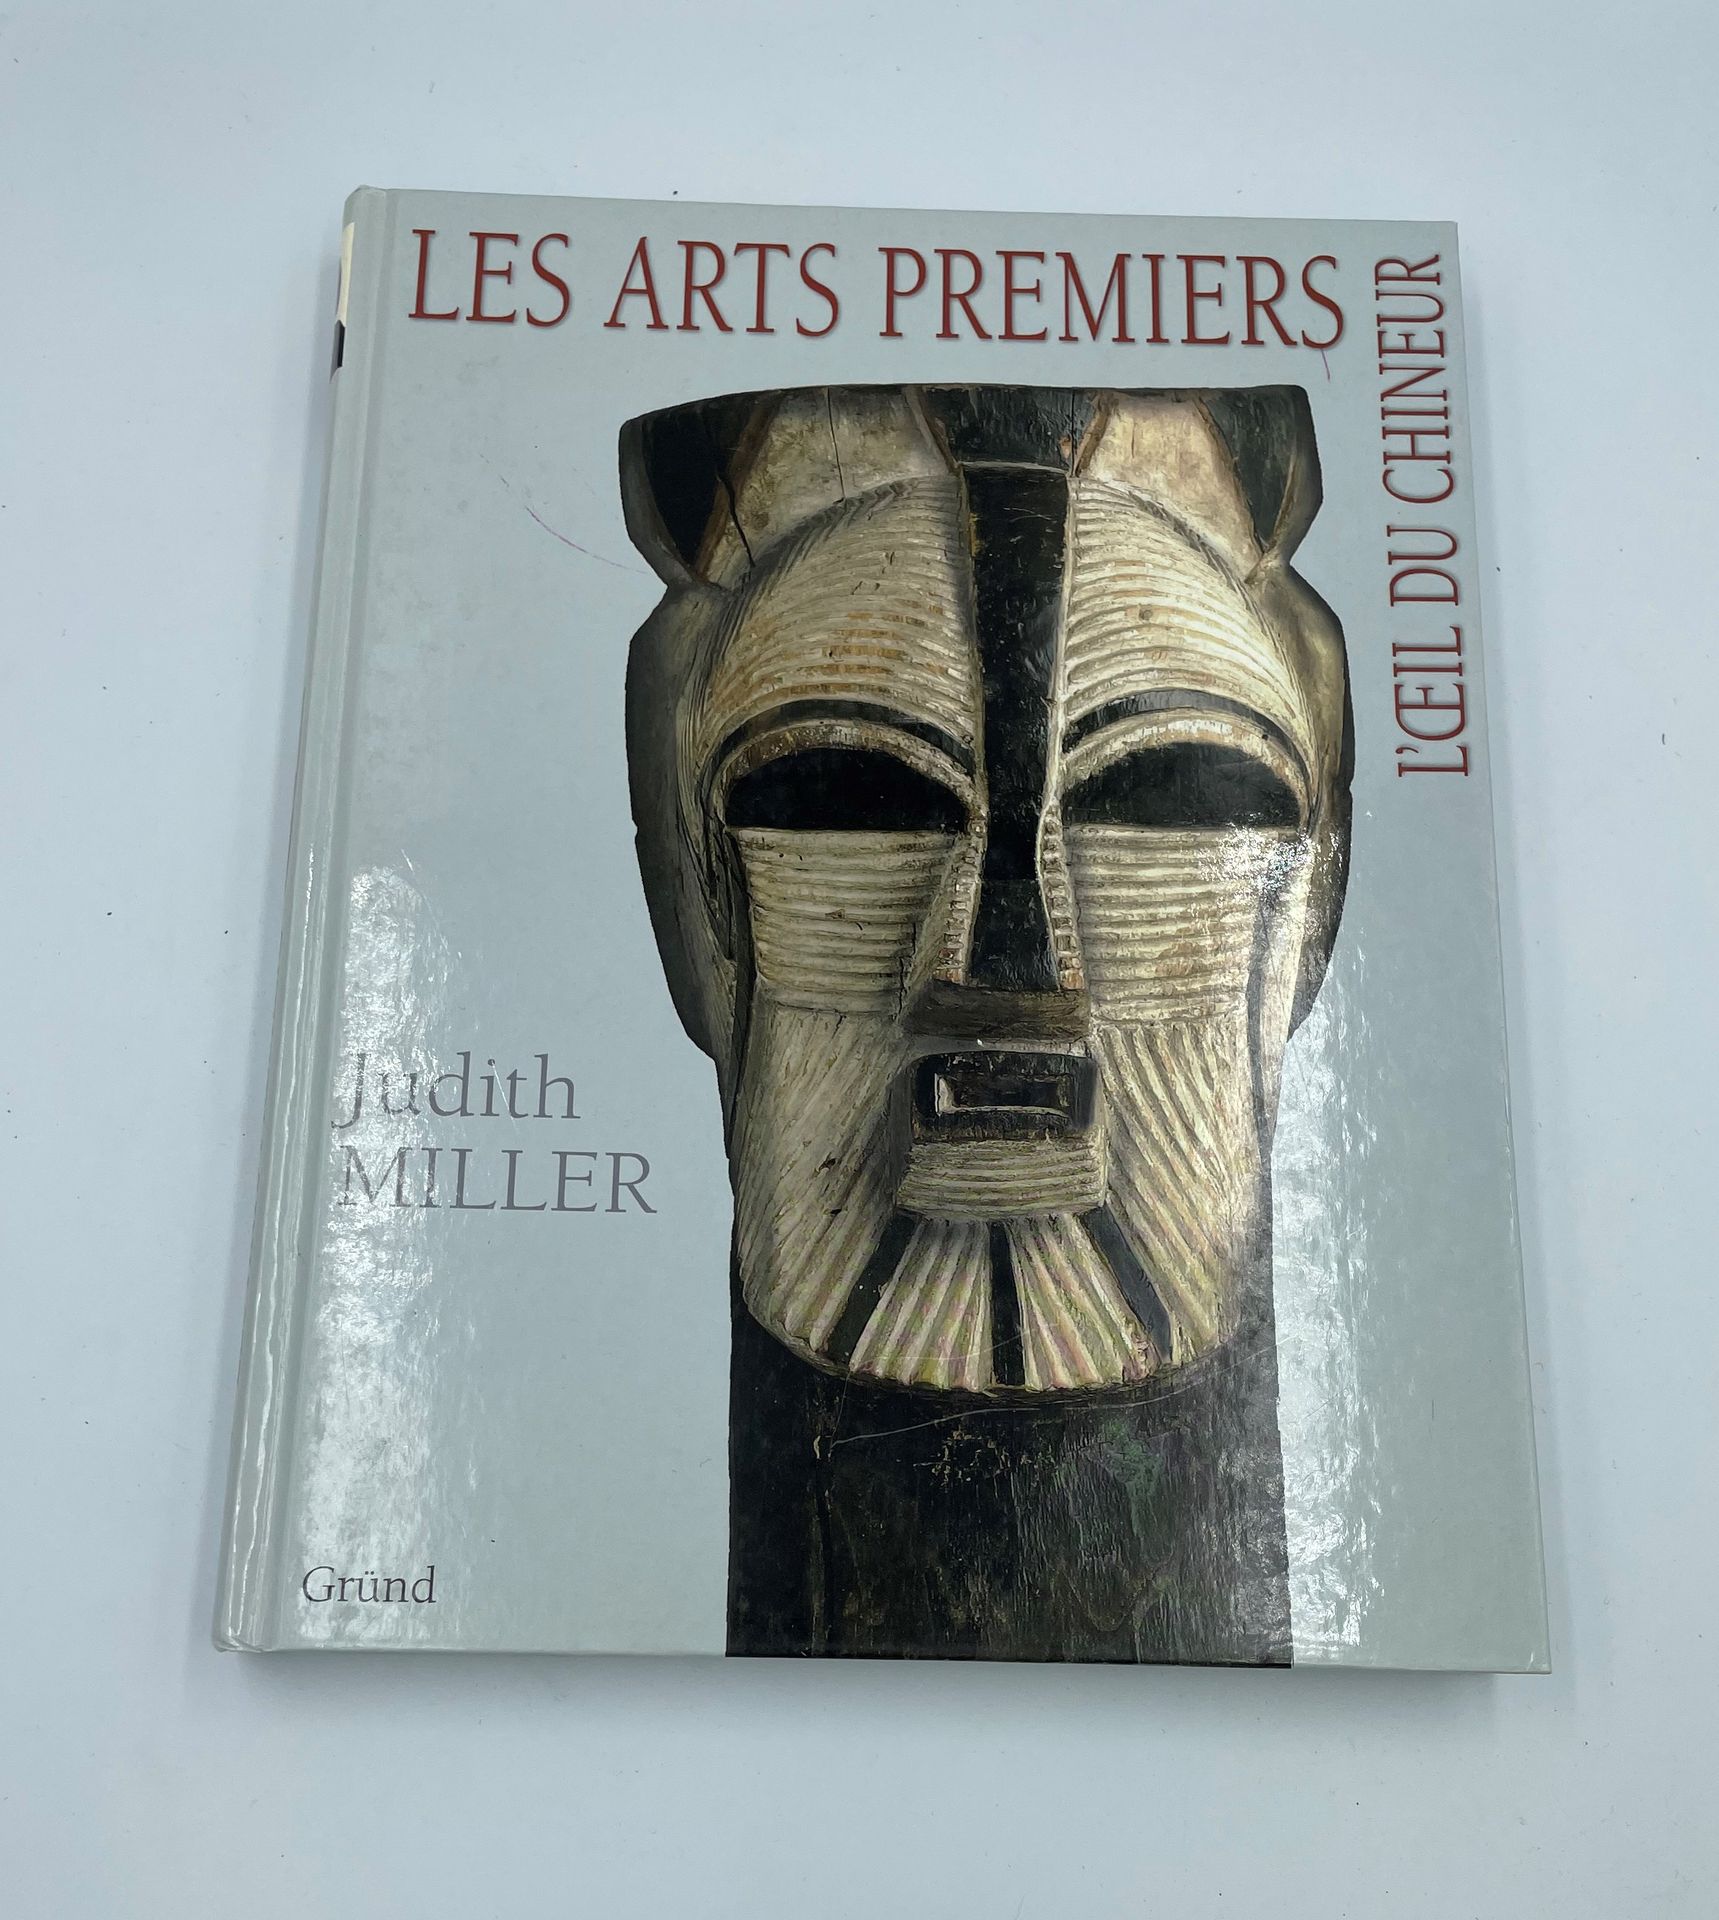 Null GRUND, J. MILLER, 《猎人之眼》, Les arts premiers, 2007年